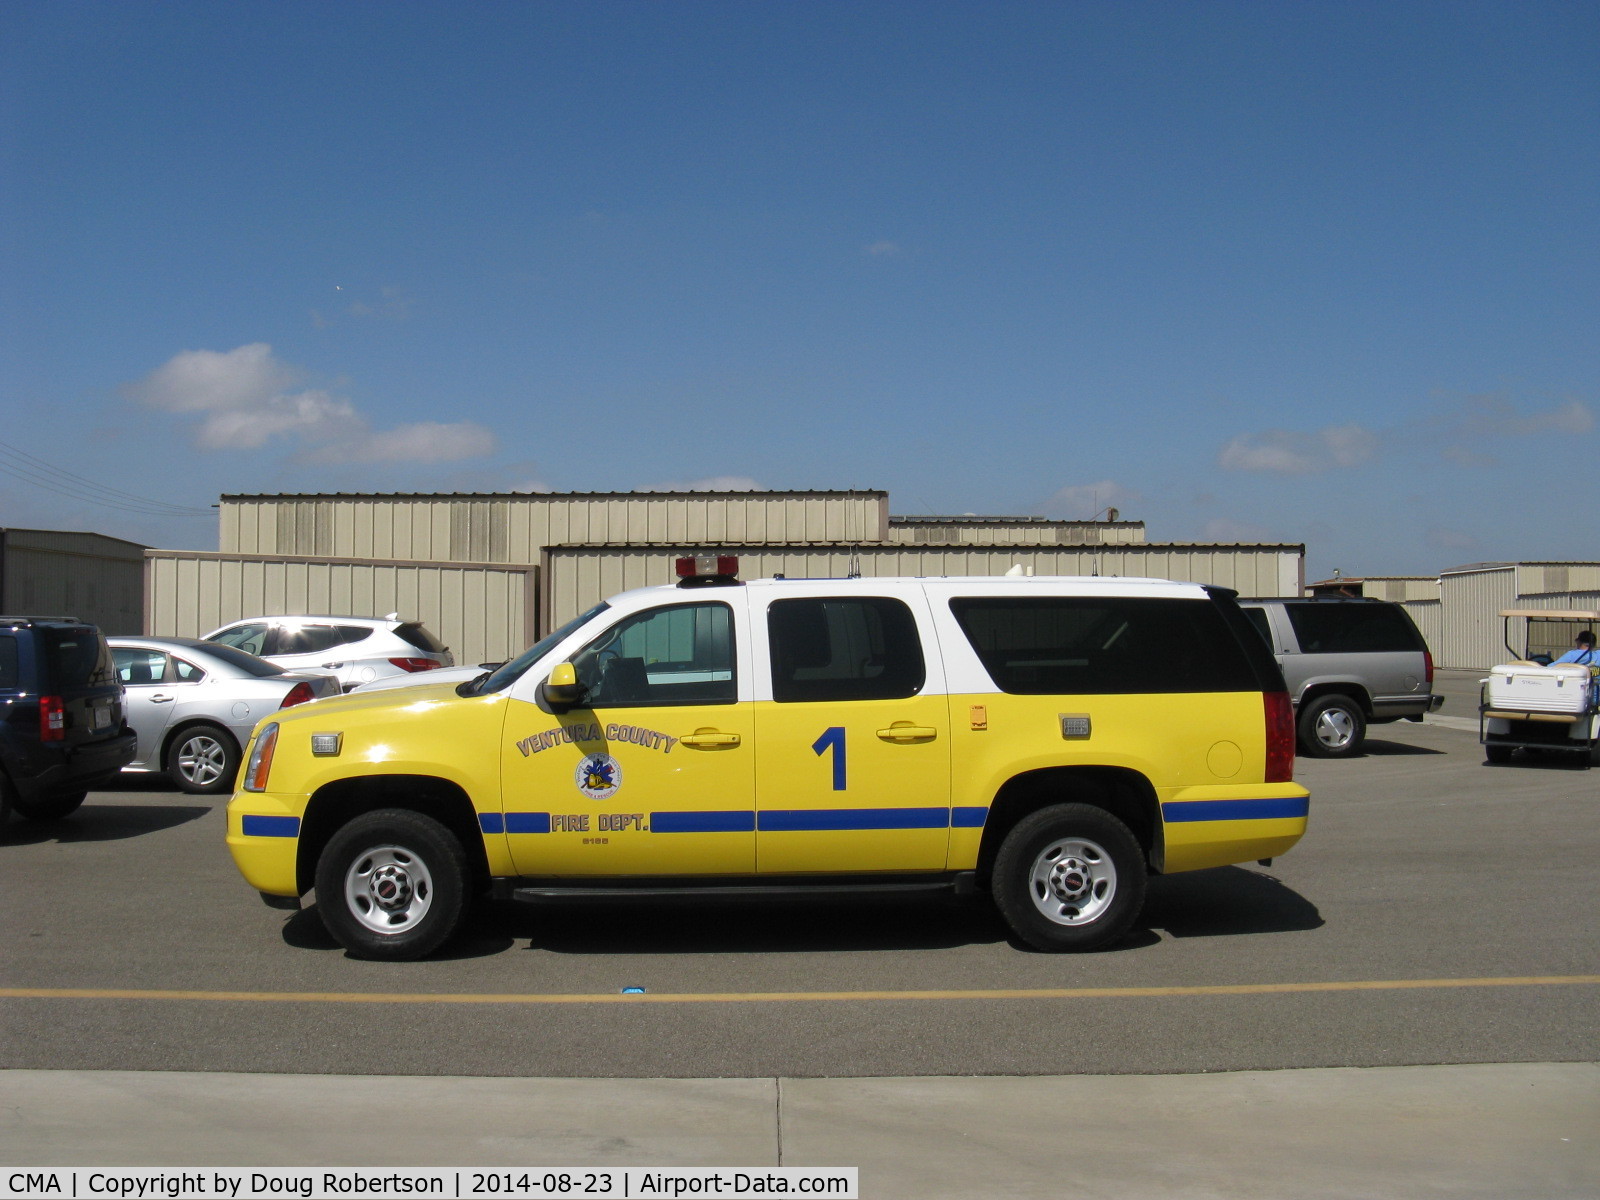 Camarillo Airport (CMA) - Ventura County Fire Department Station vehicle at CMA.